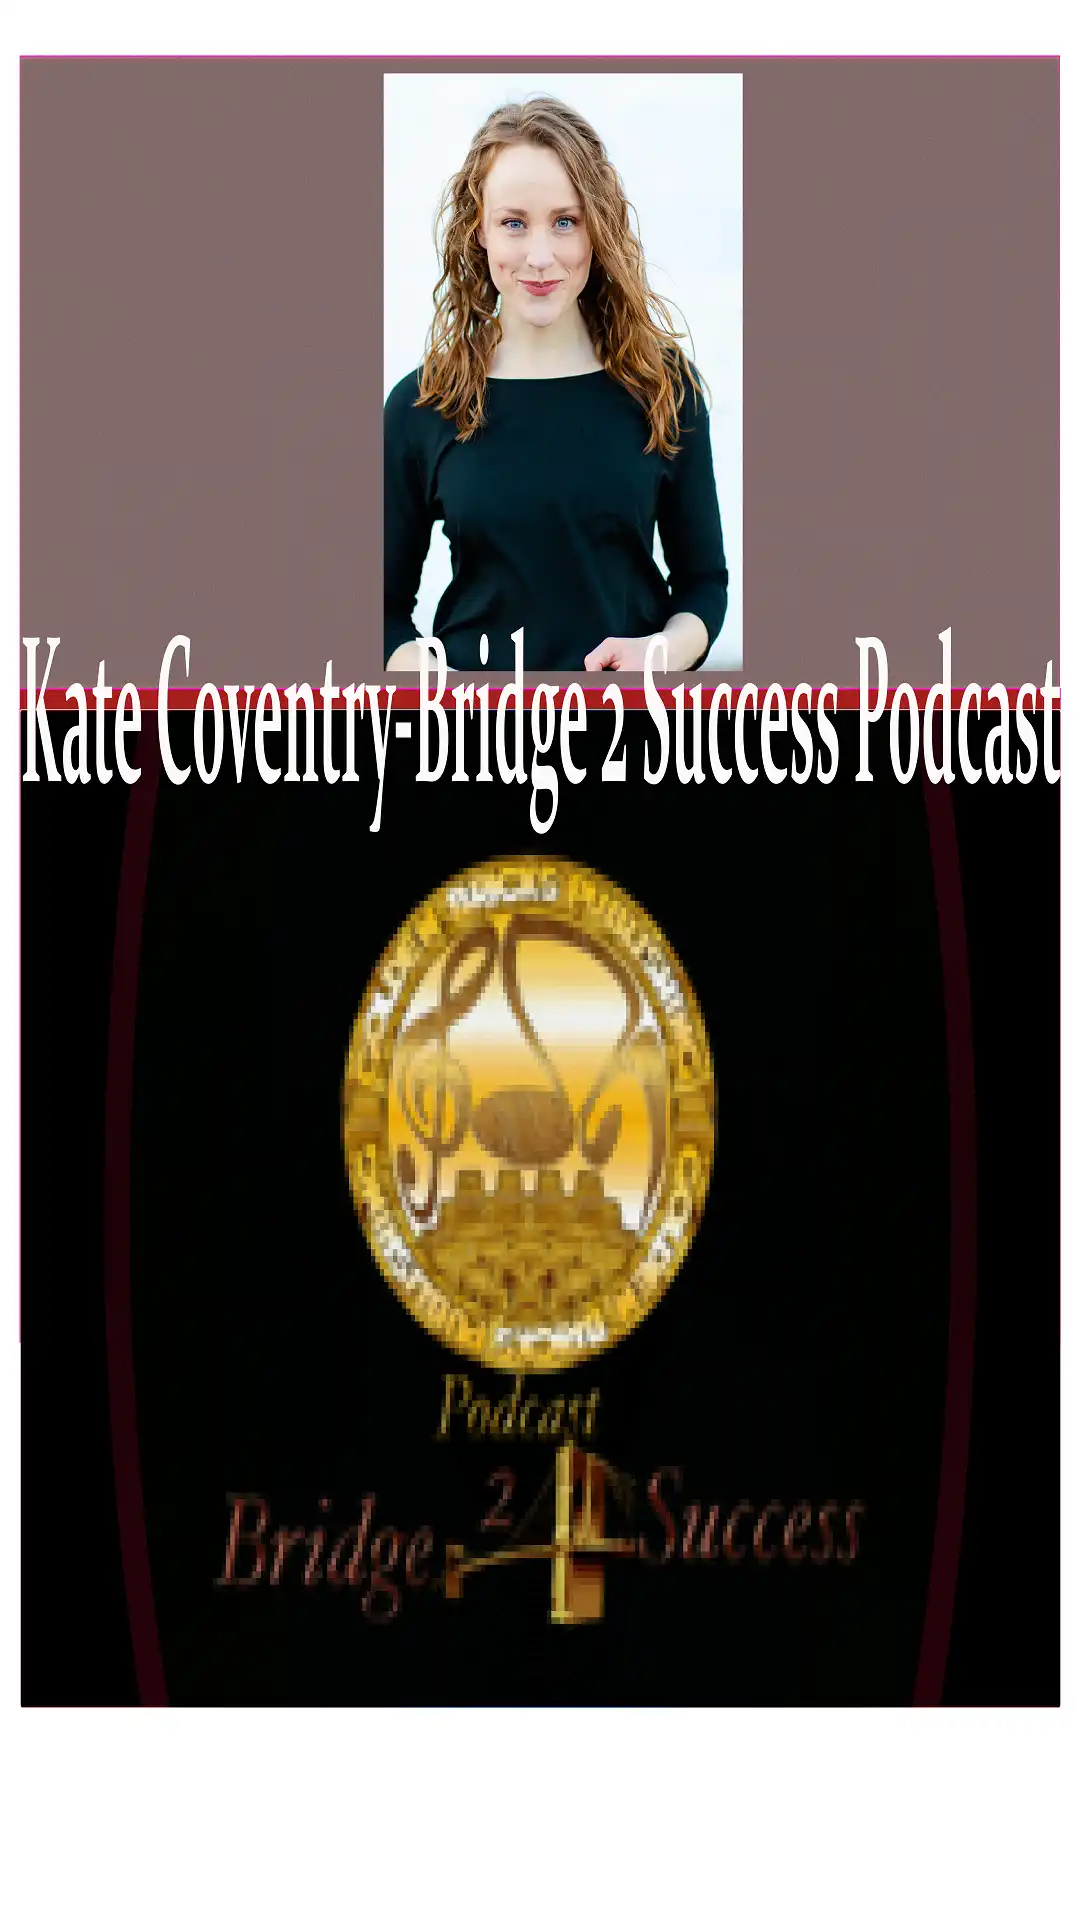 Kate Coventry-Bridge 2 Success Podcast